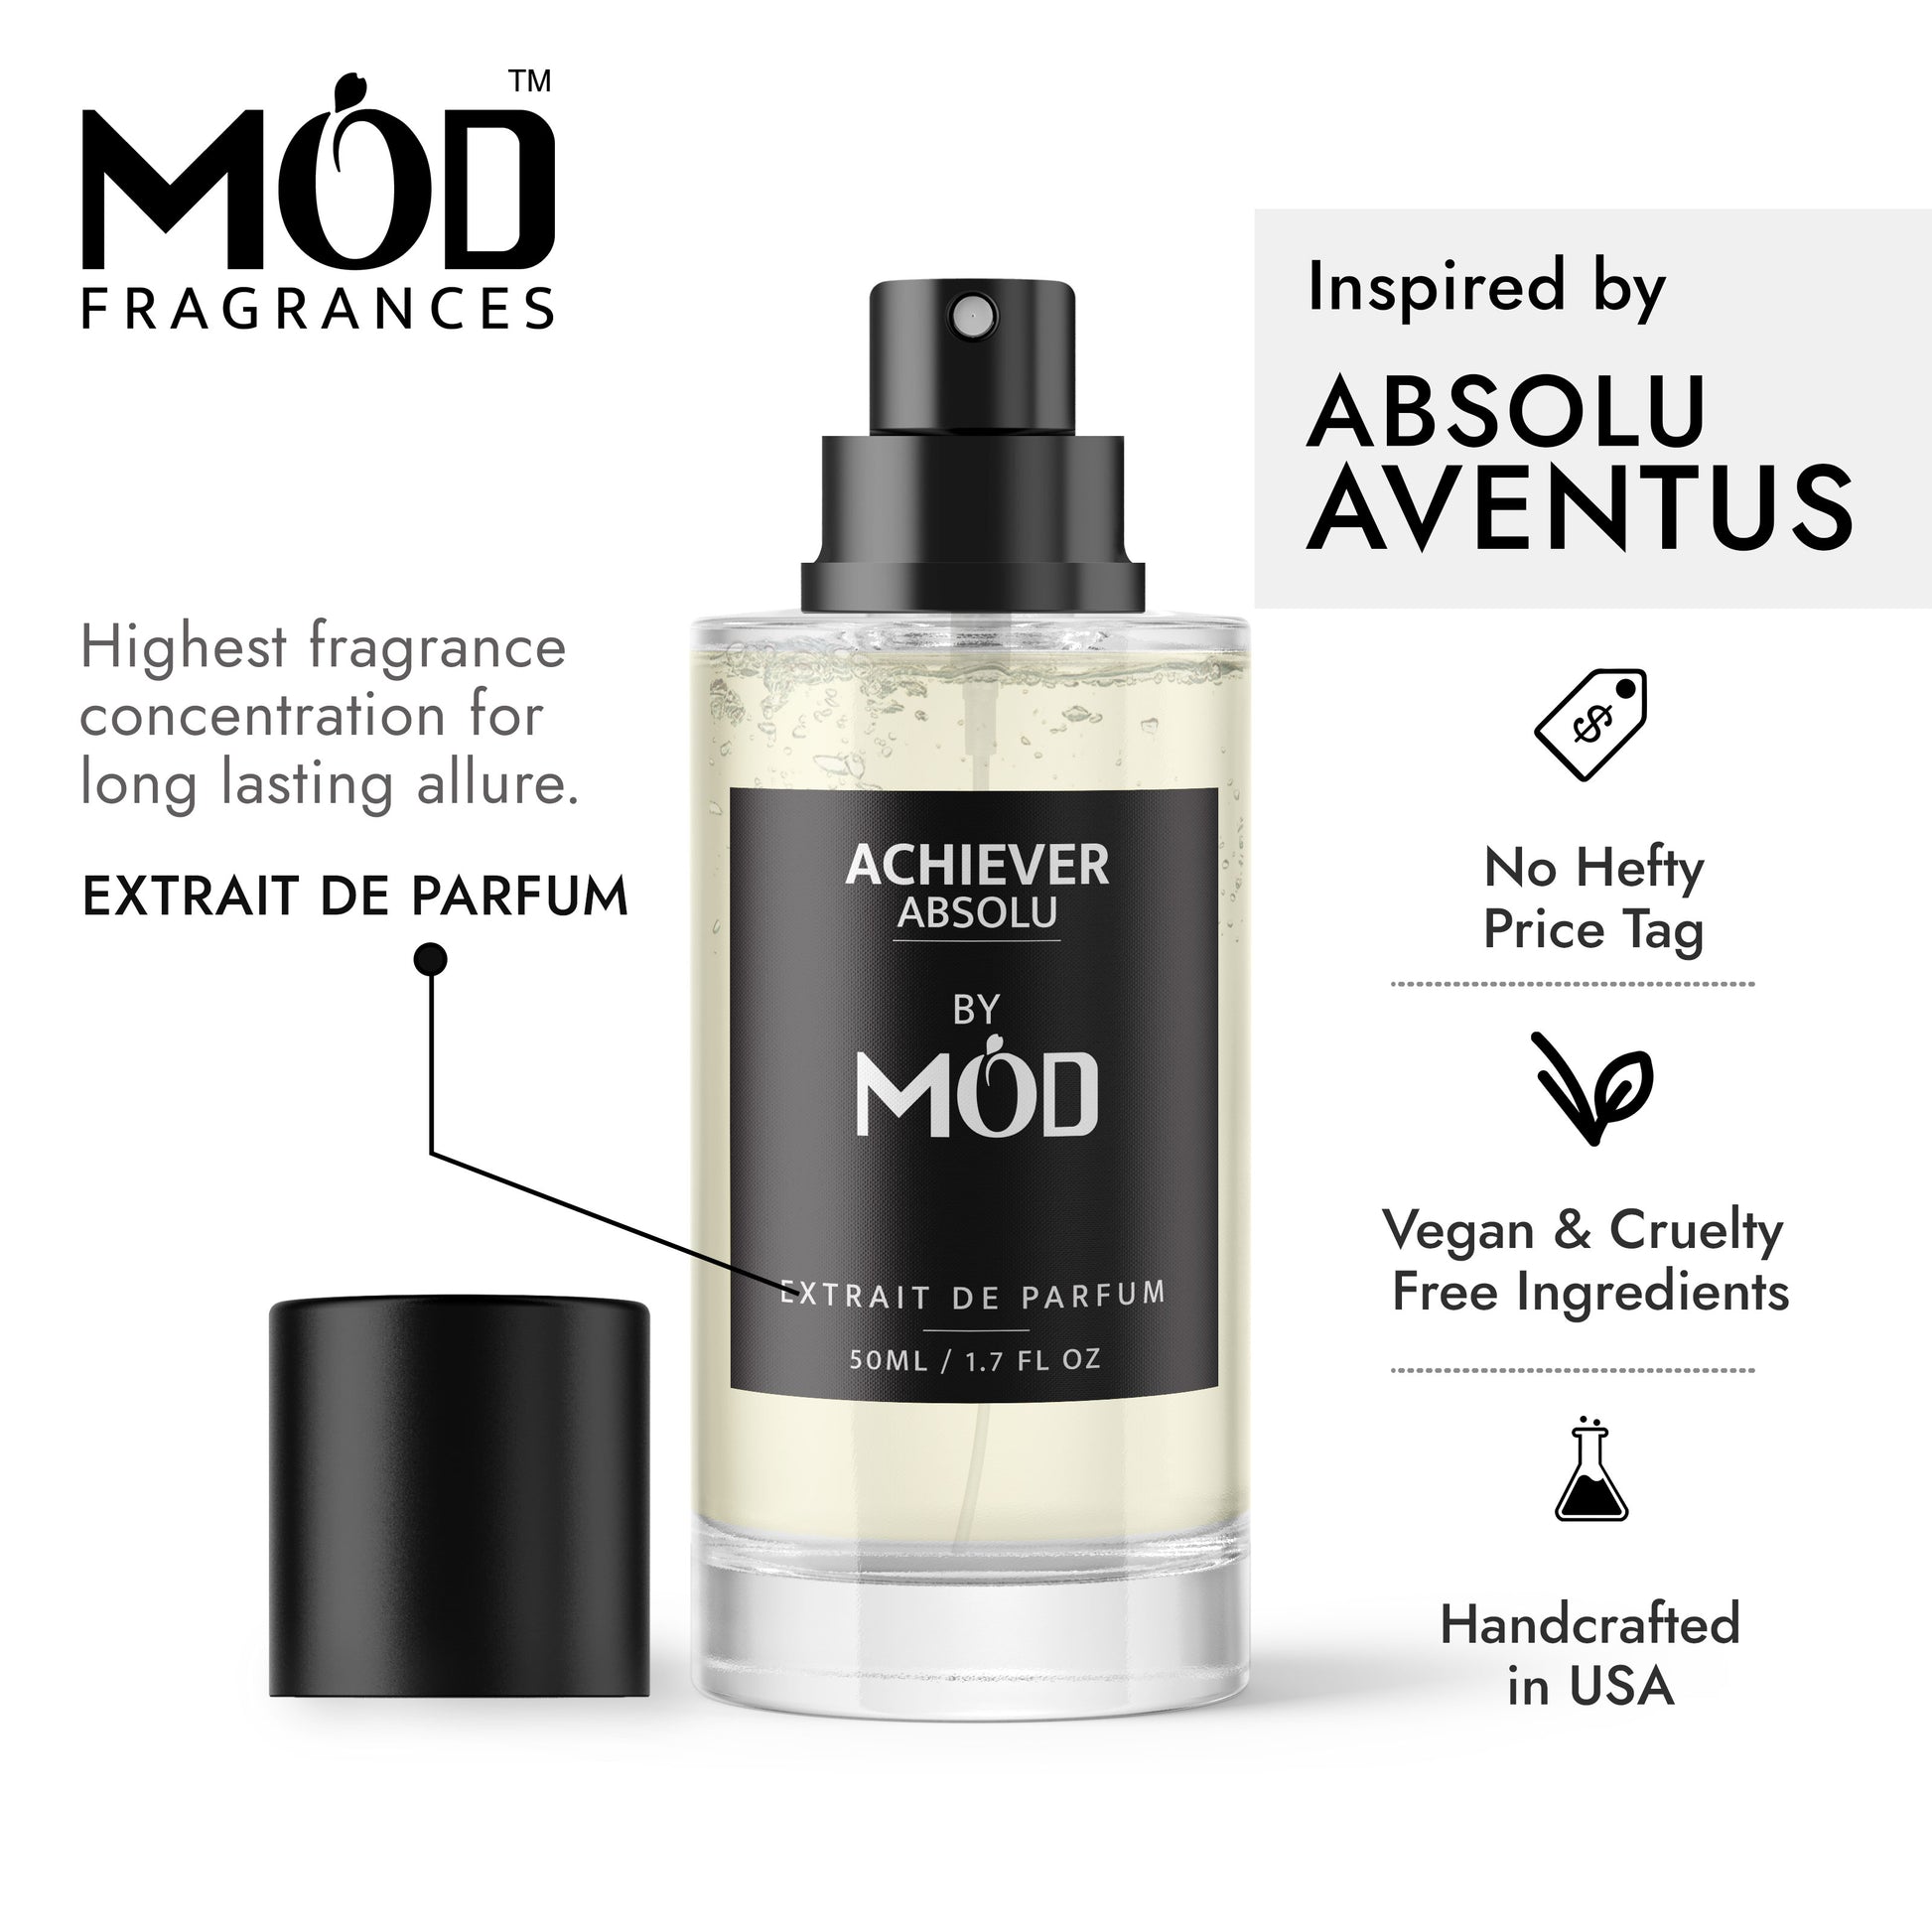 Achiever Absolu - Mod Fragrances